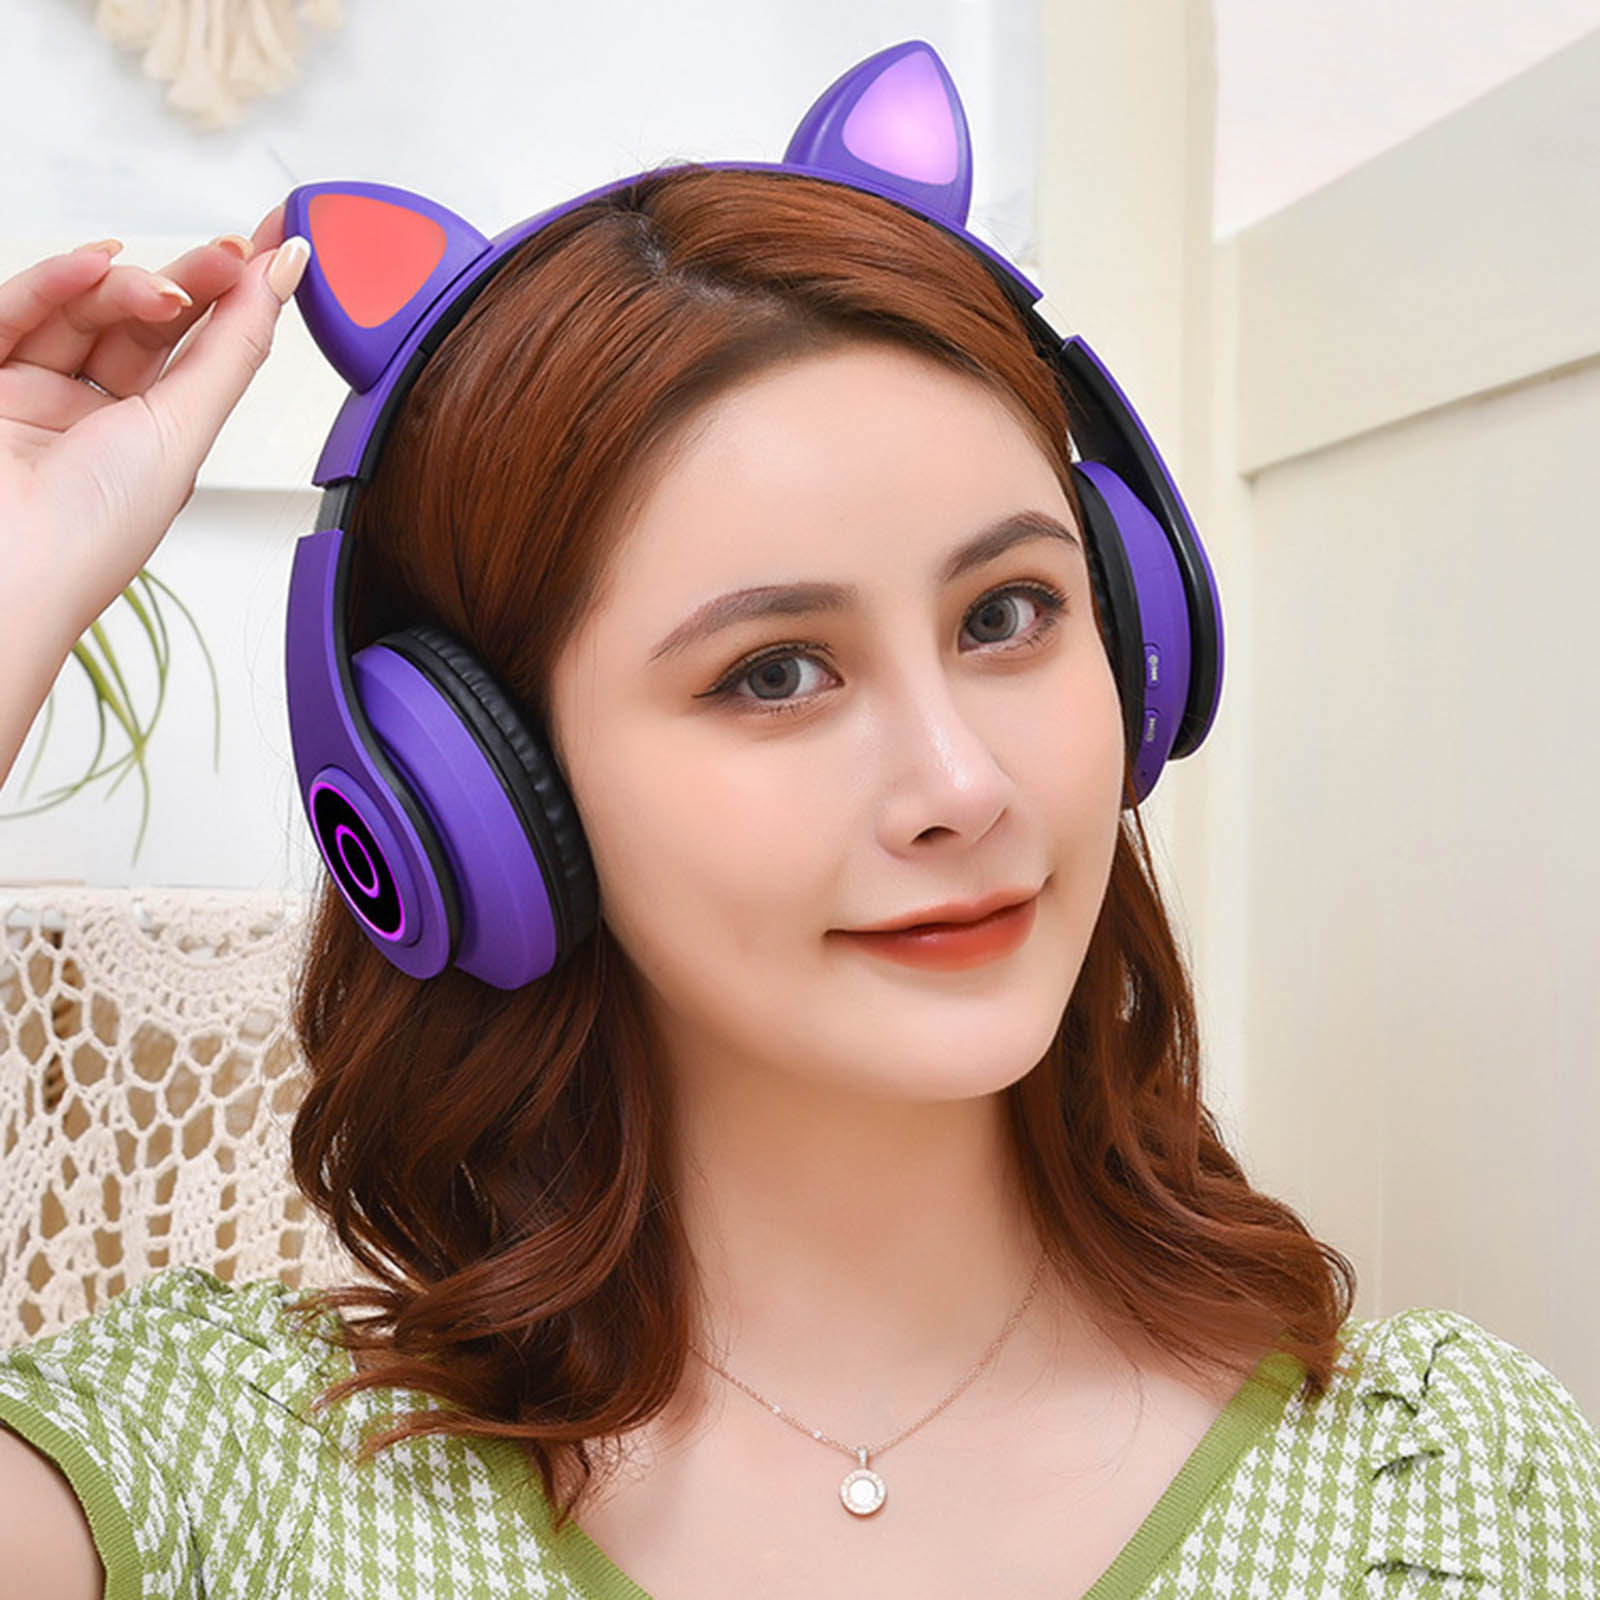 Dcenta Bluetooth Noise-Canceling Over-Ear Headphones, White, B39